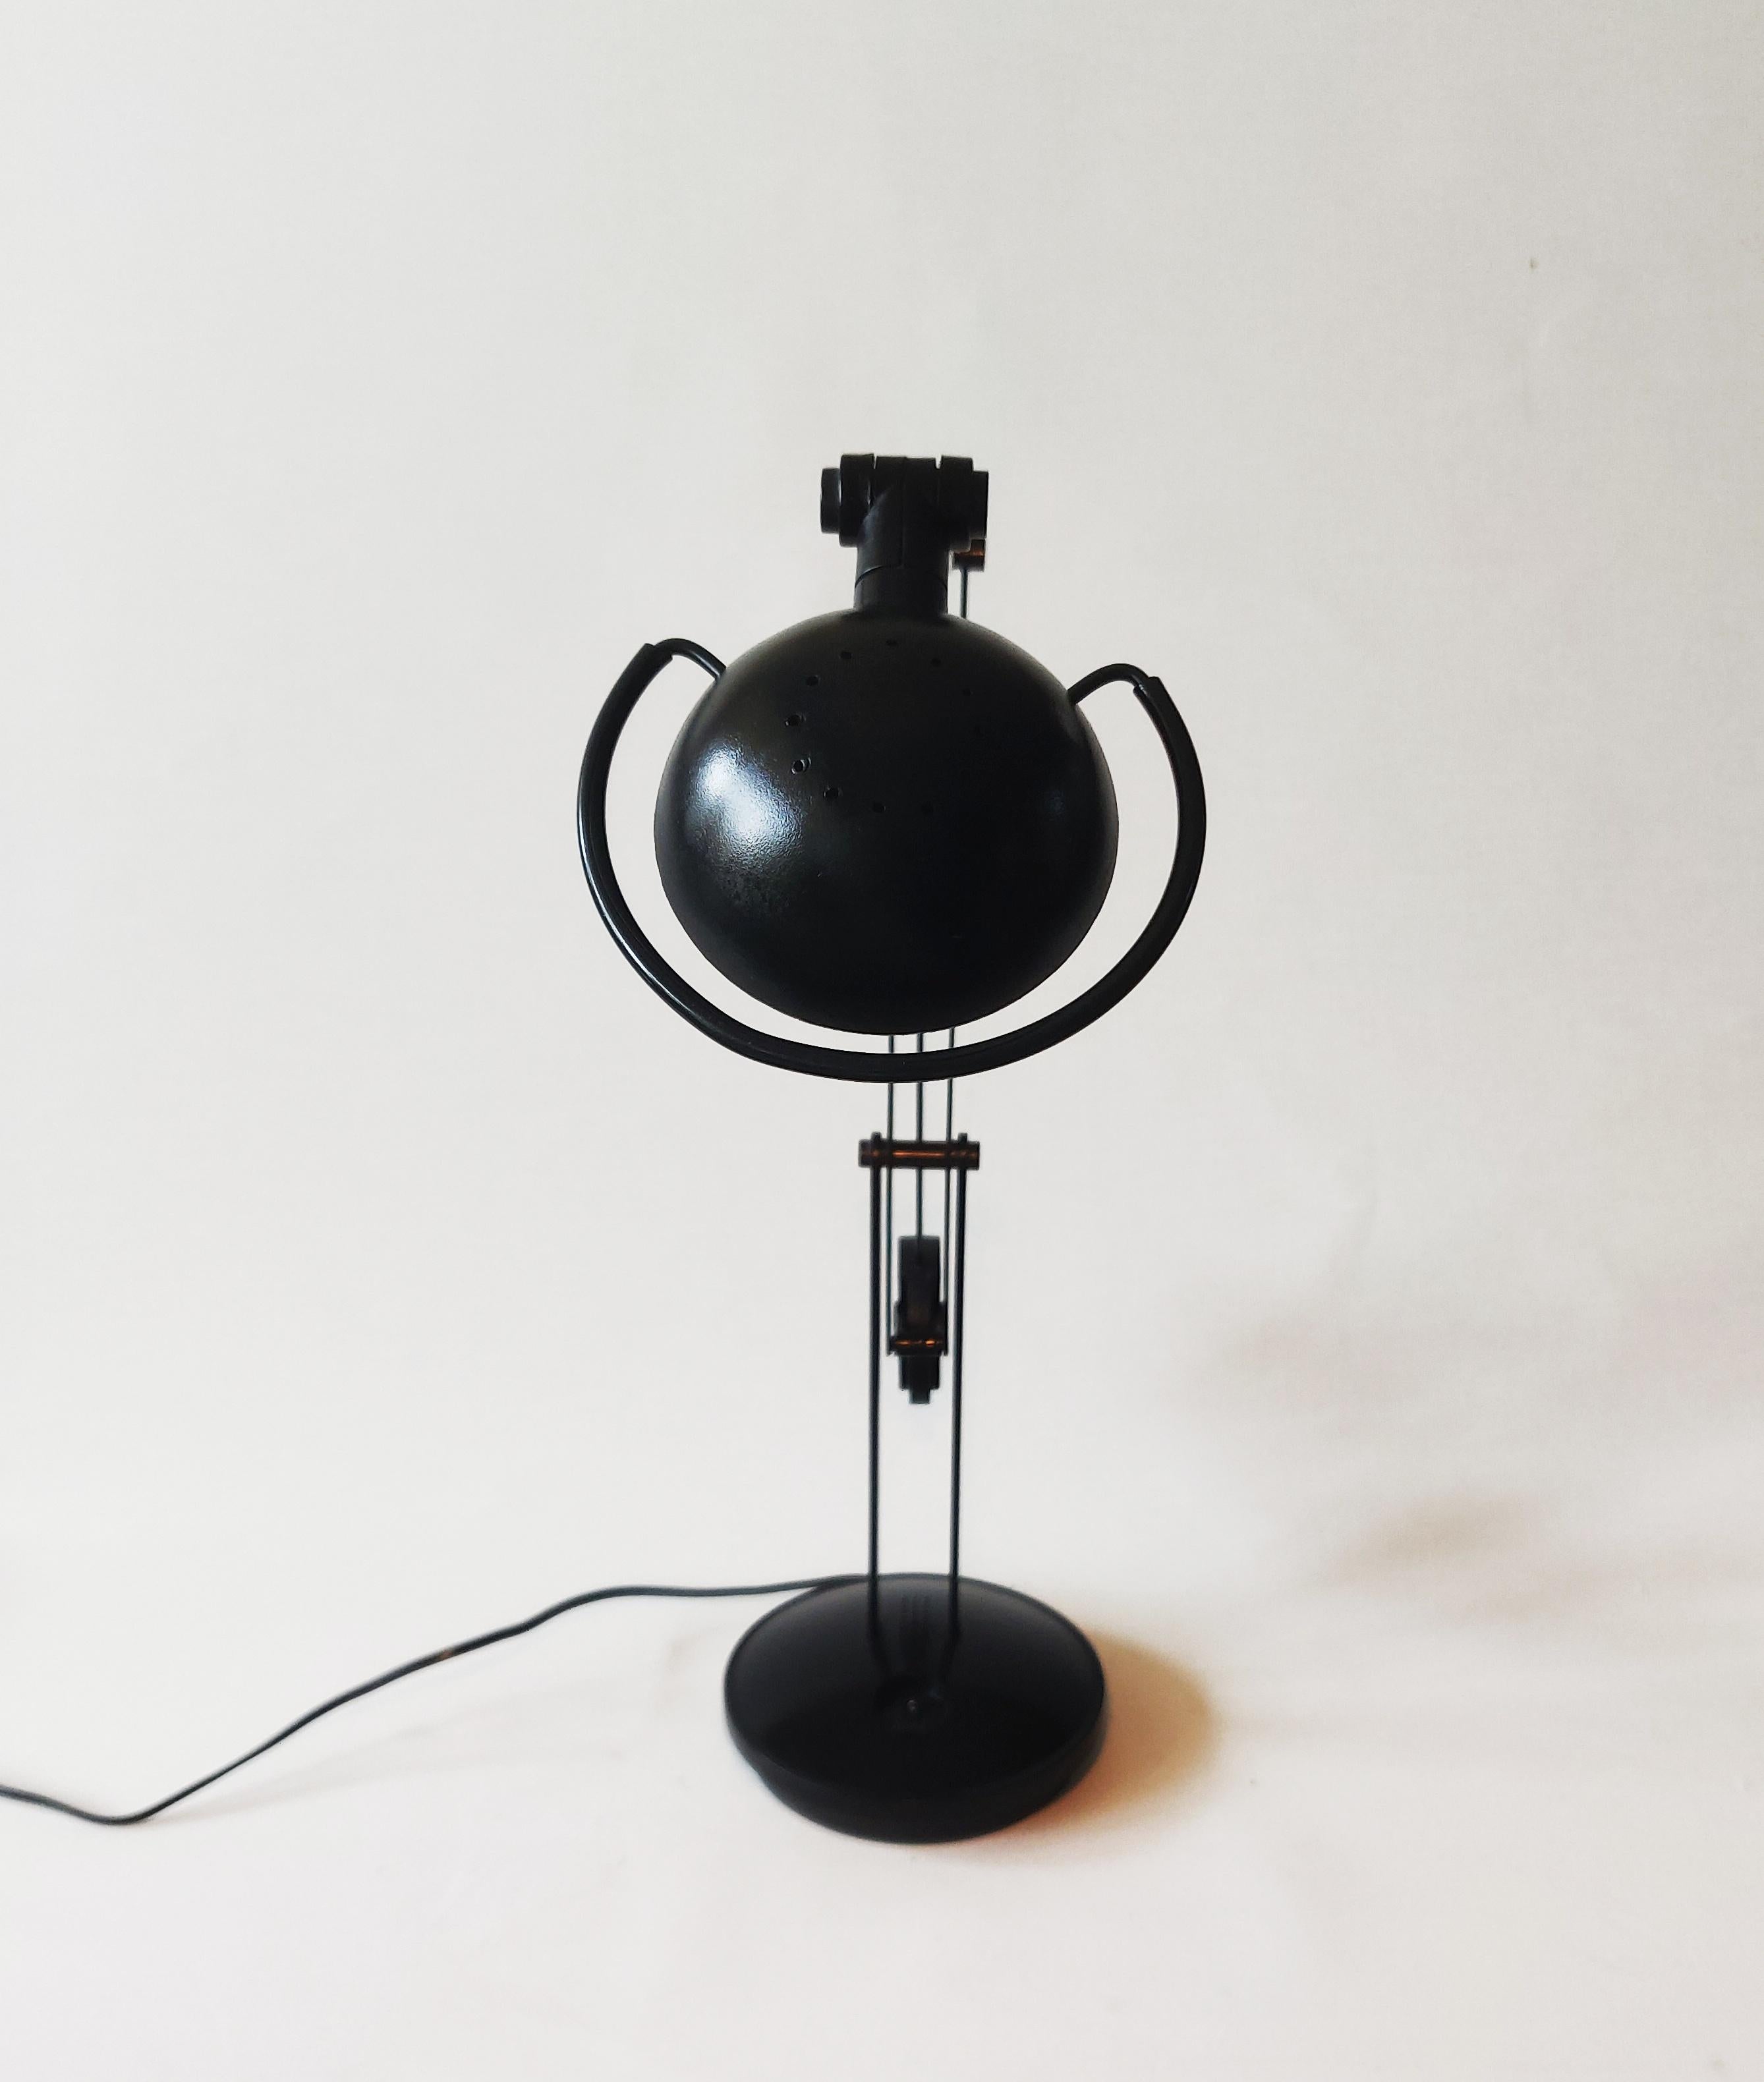 Counter Balance Architect Desk Lamp, 1980s For Sale 2